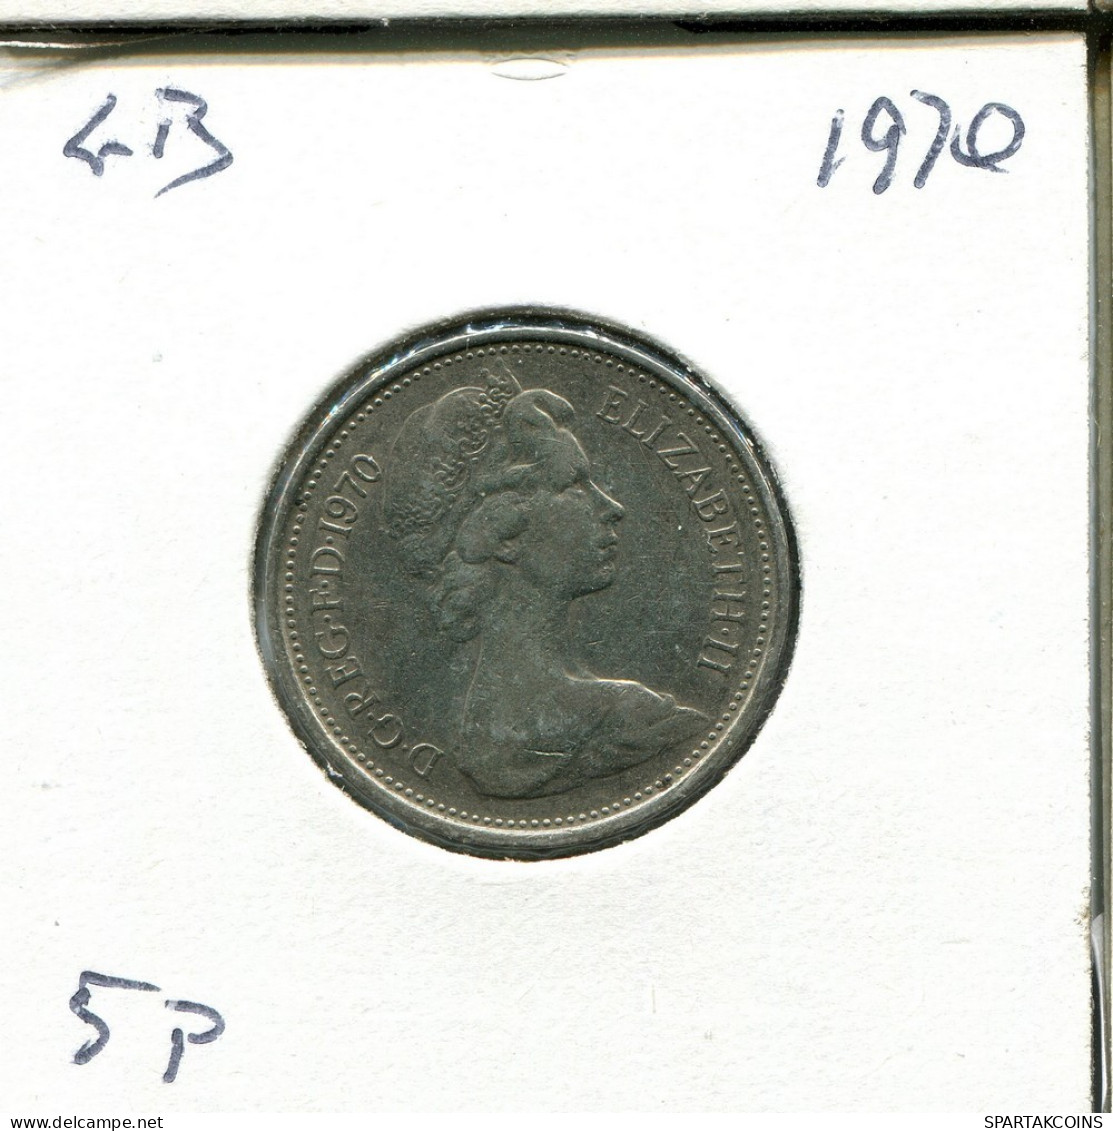 5 NEW PENCE 1970 UK GROßBRITANNIEN GREAT BRITAIN Münze #AU825.D.A - Altri & Non Classificati